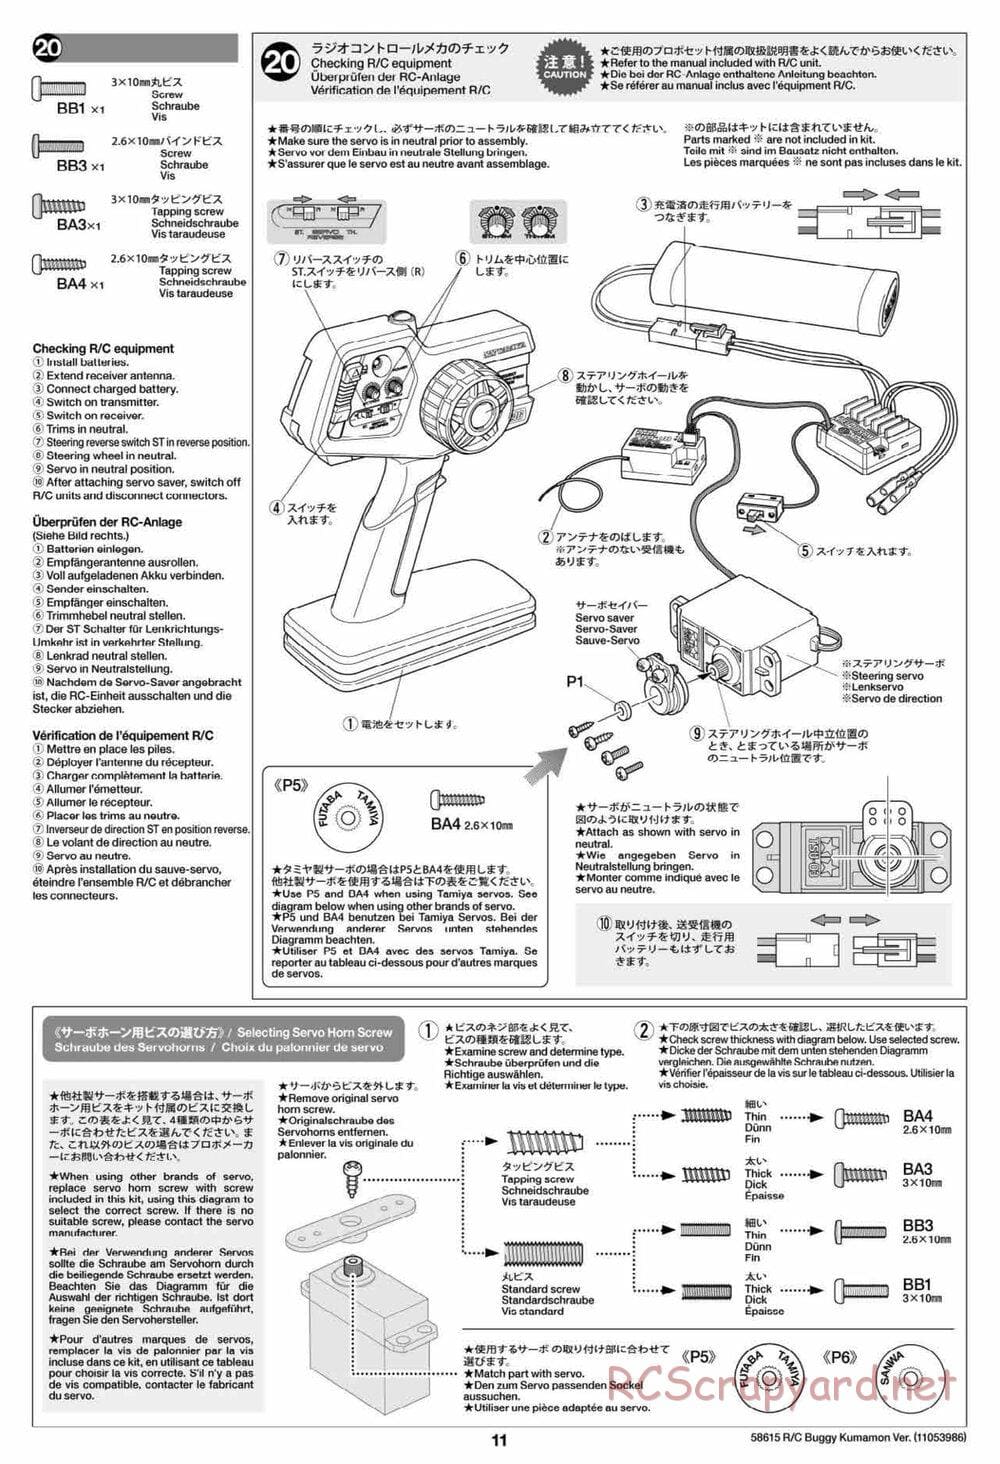 Tamiya - Buggy Kumamon Version Chassis - Manual - Page 11